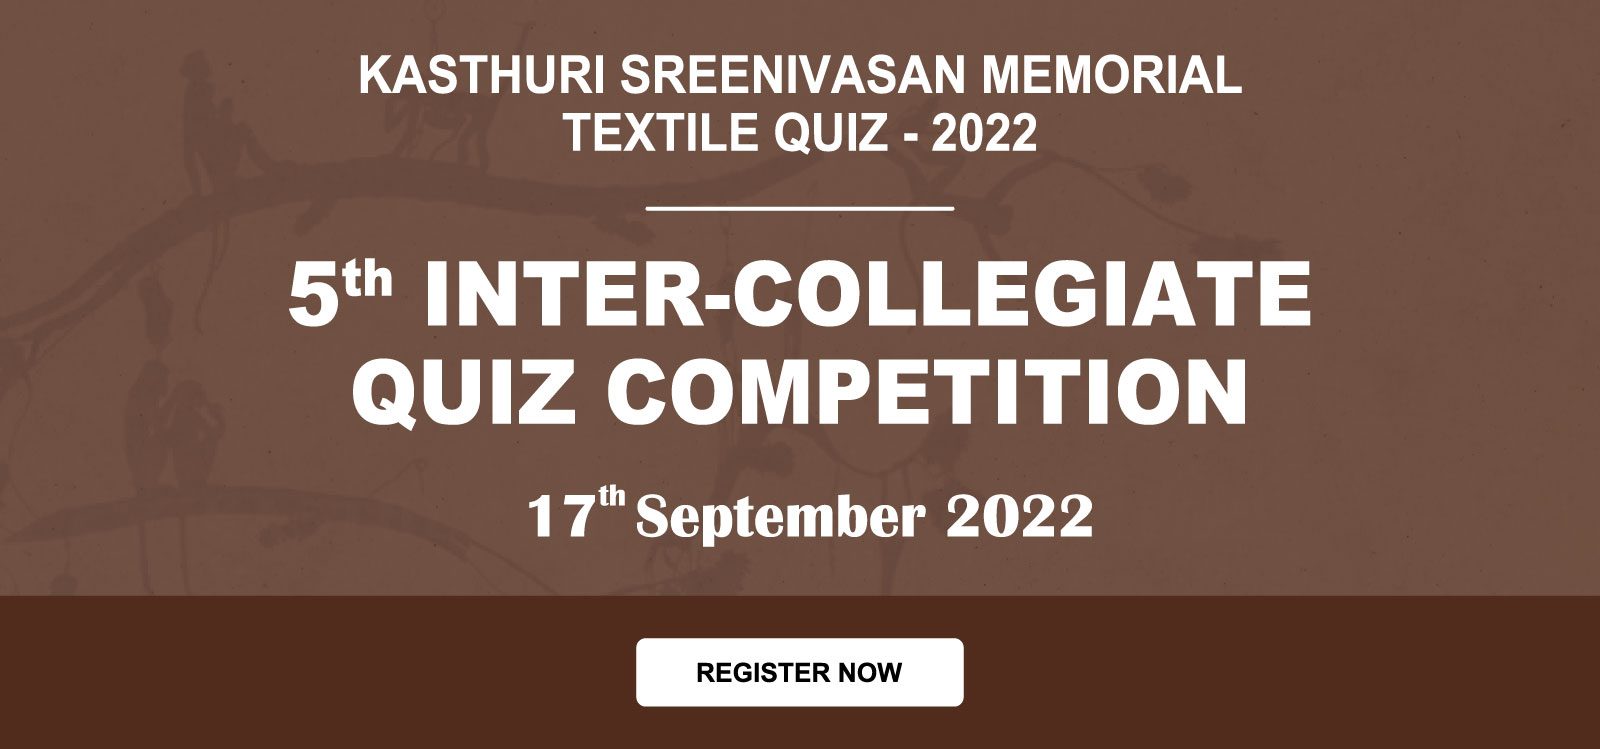 KST-Textile-Quiz-2022-Banner